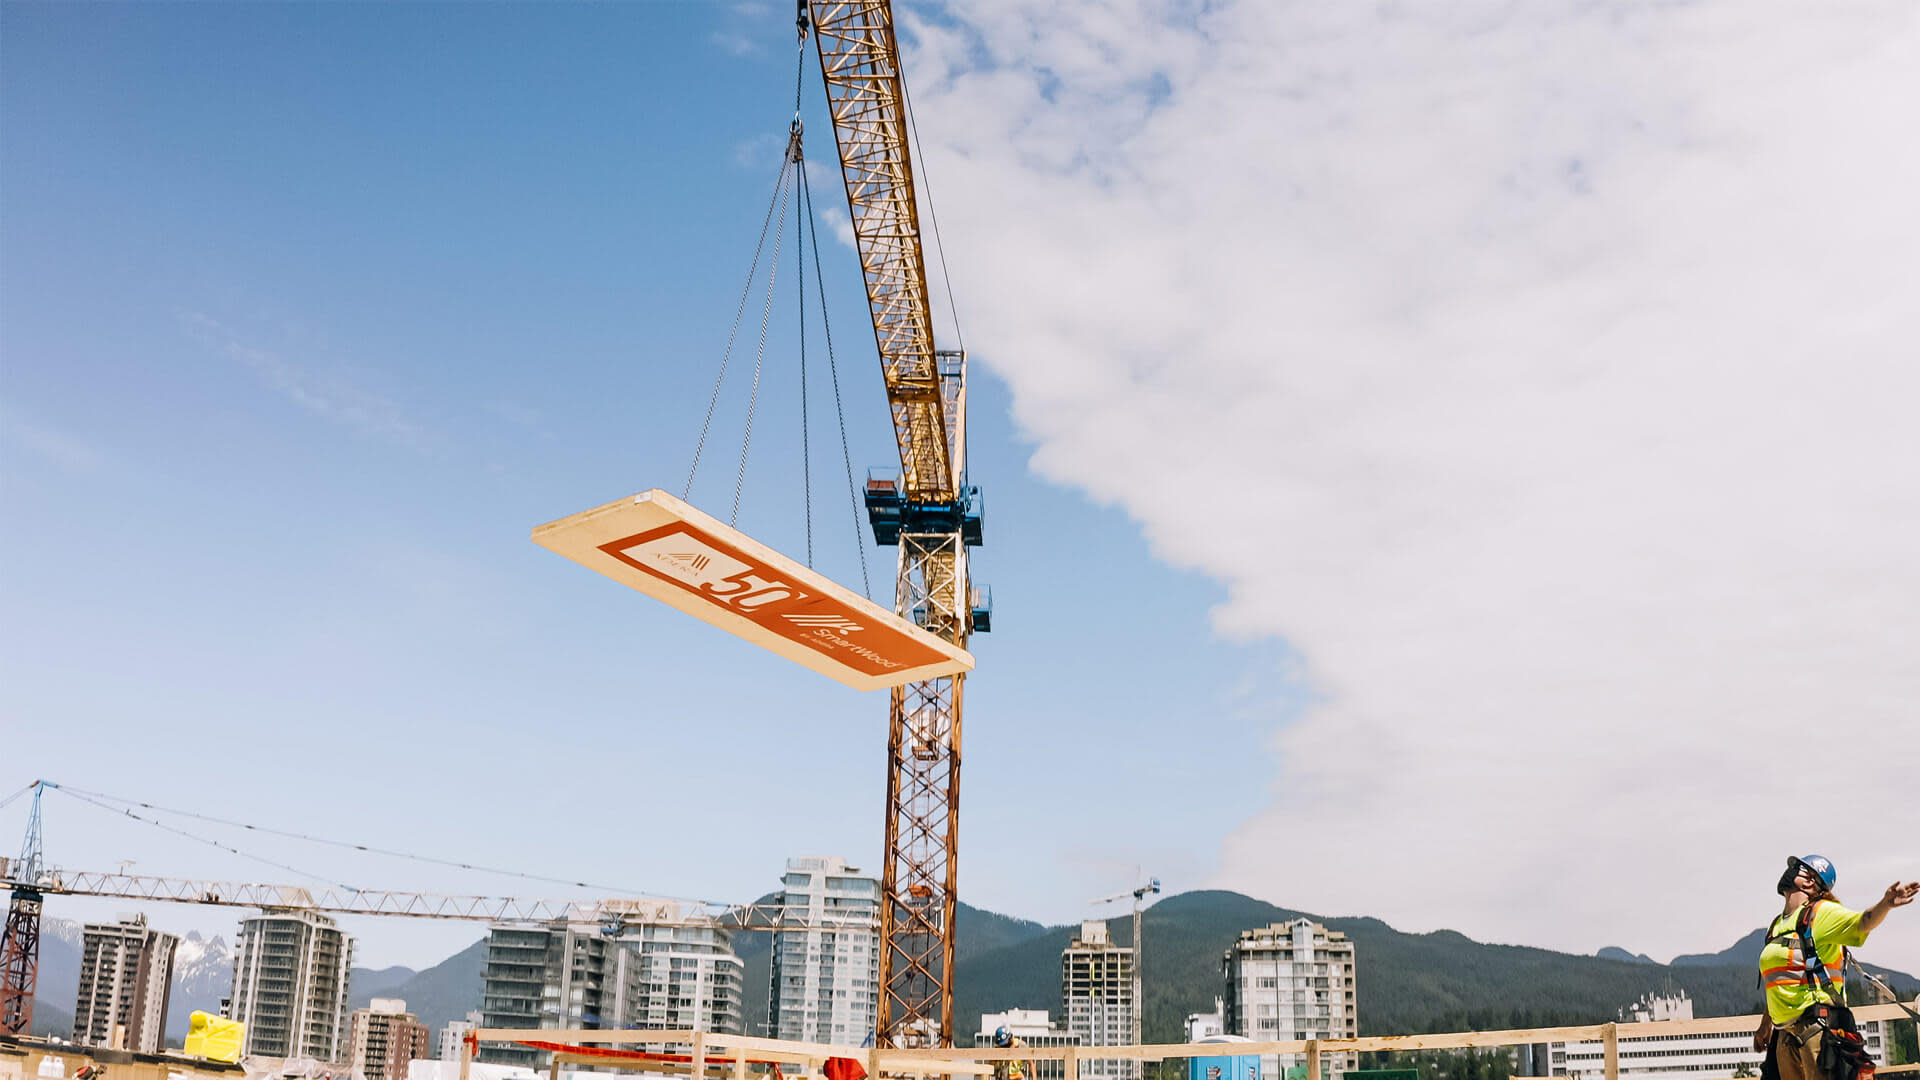 Crane in a construction site